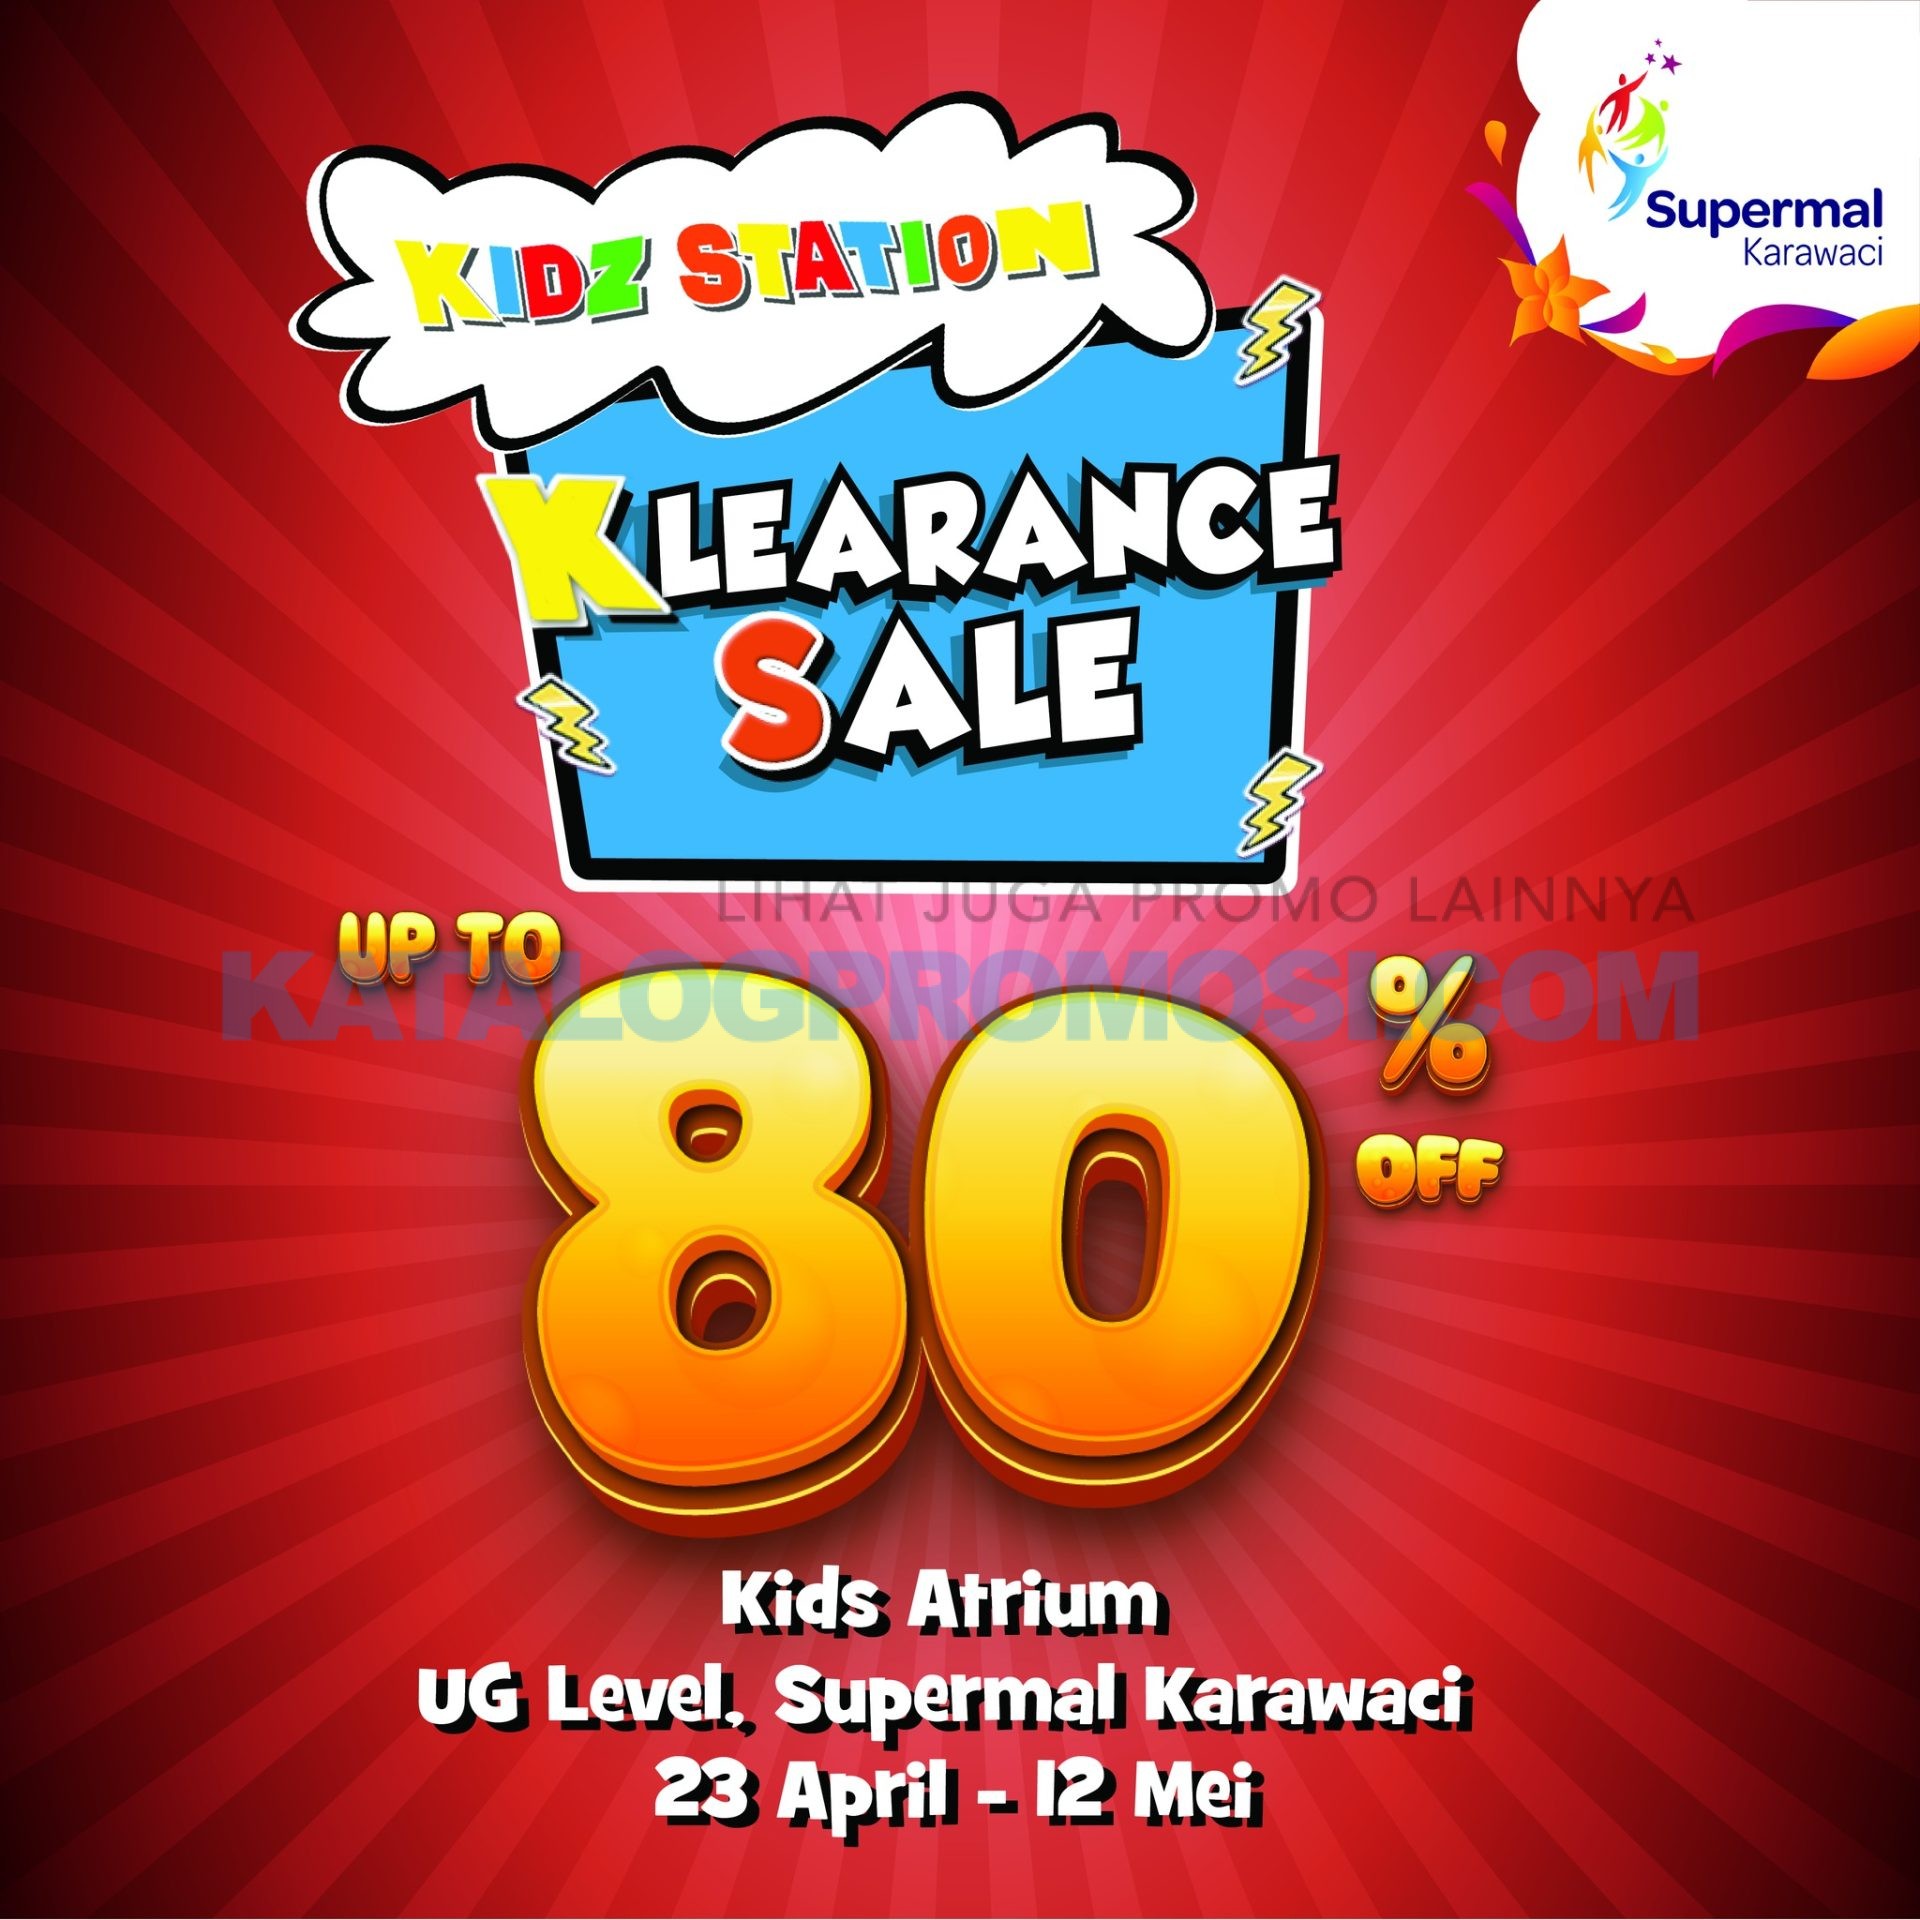 Promo KIDZ STATION Klearance Sale up to 80% off